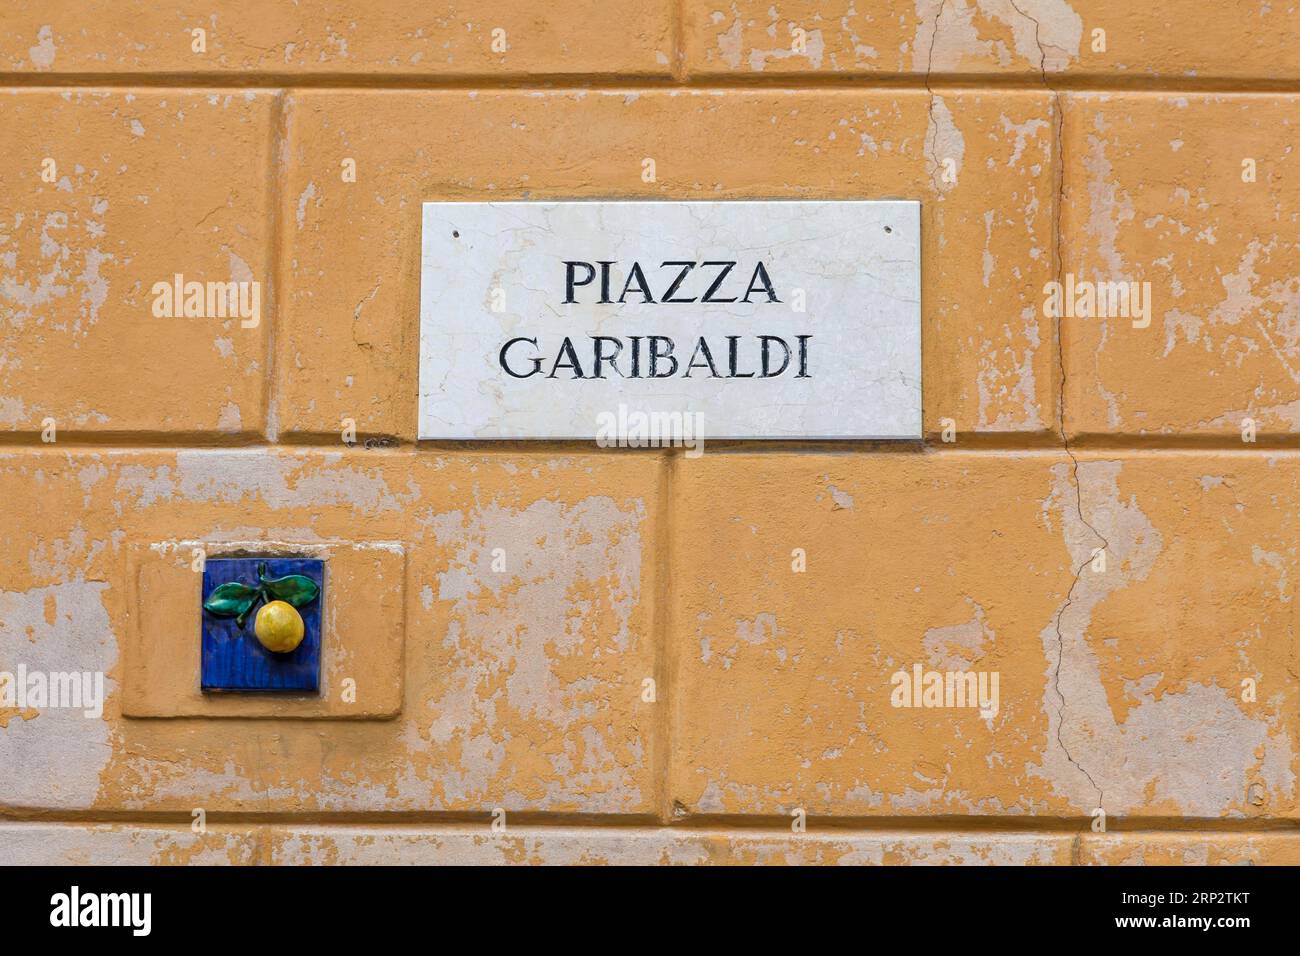 Piazza Garibaldi, panneau de rue, Limone sul Garda, Lac de Garde, Italie du Nord, Italie Banque D'Images